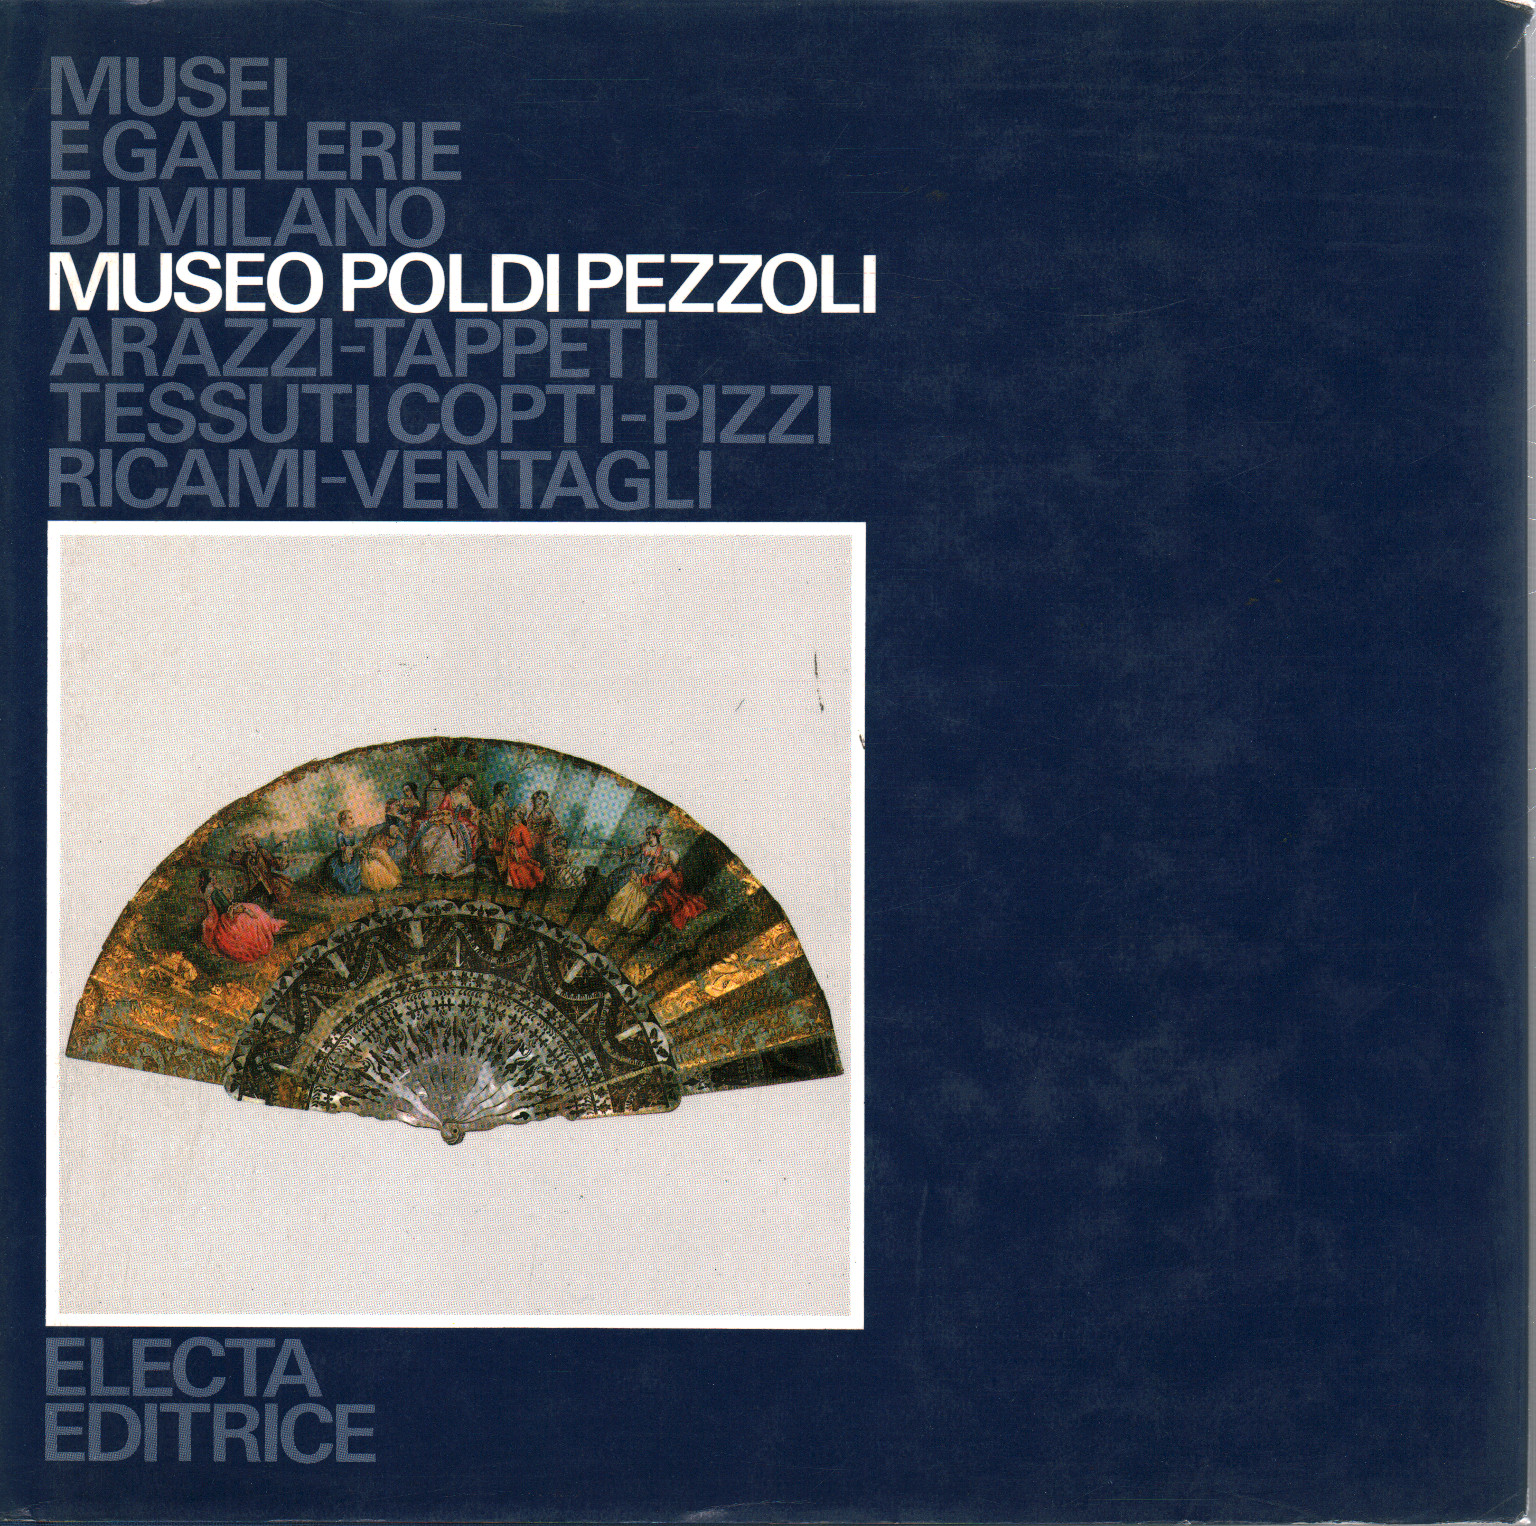 Poldi Pezzoli Museum, s.a.